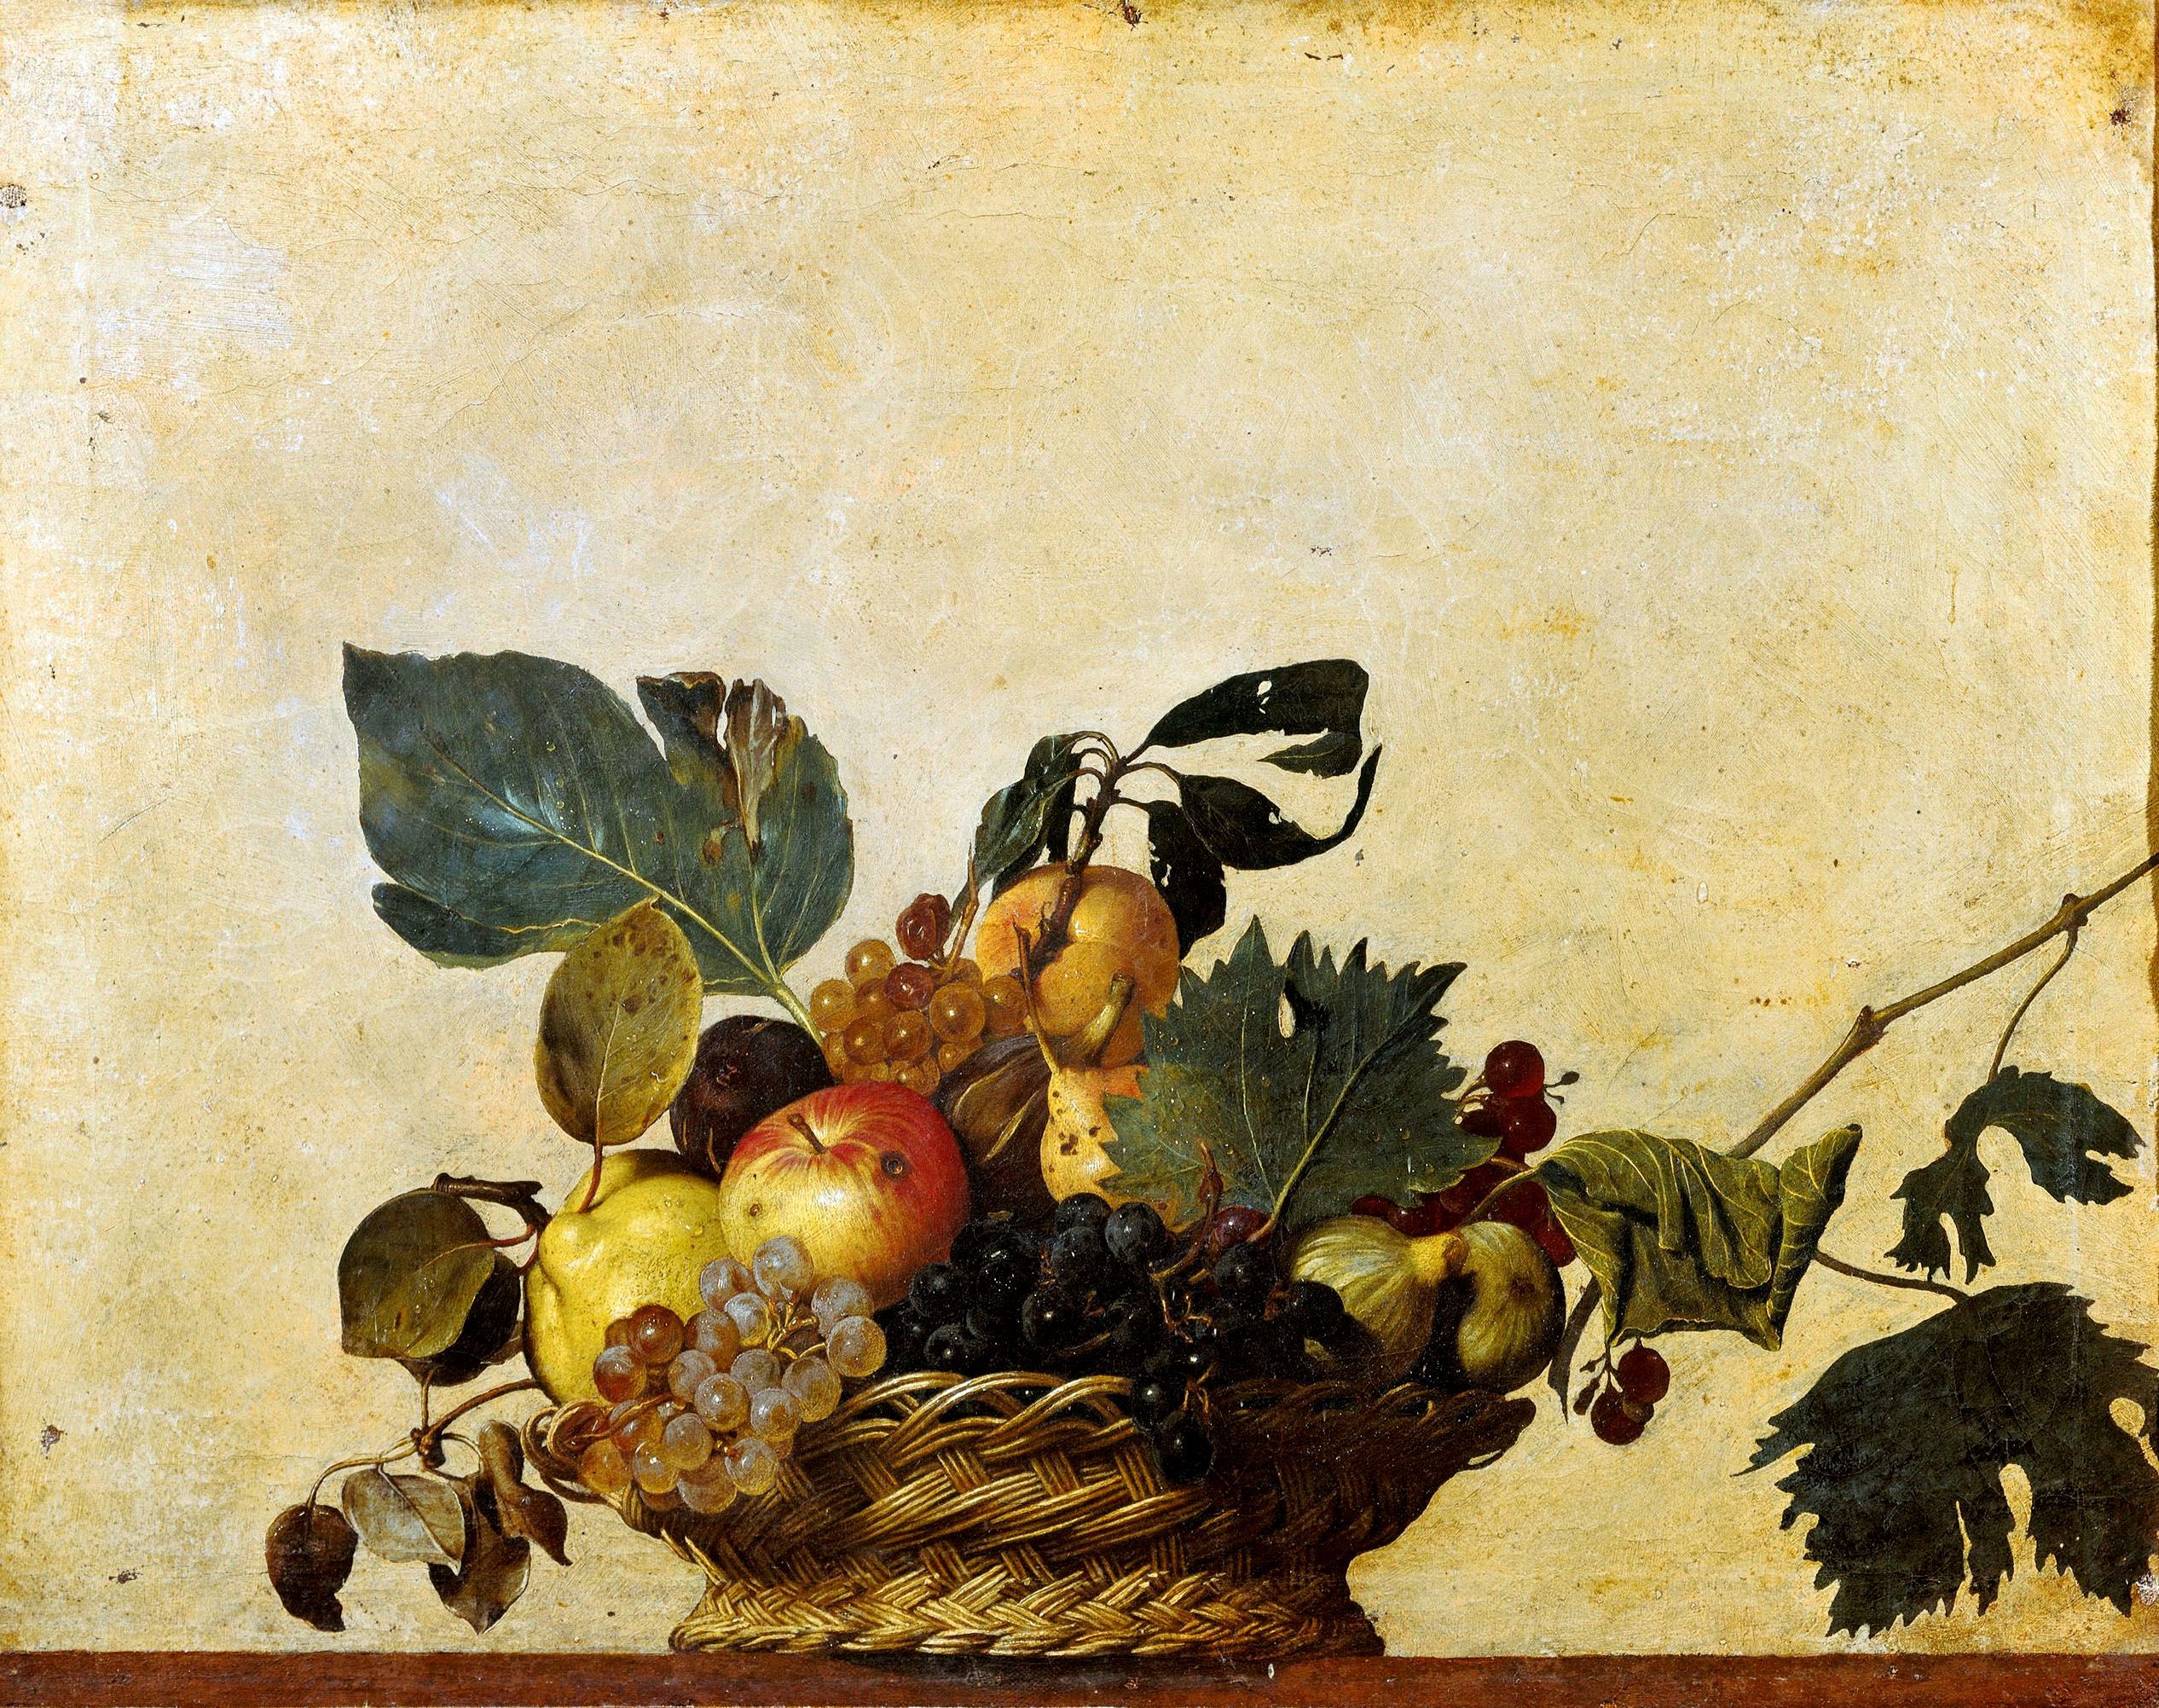 Canestra di frutta by Michelangelo Merisi - 1610 - 47,00 x 60,80 cm 